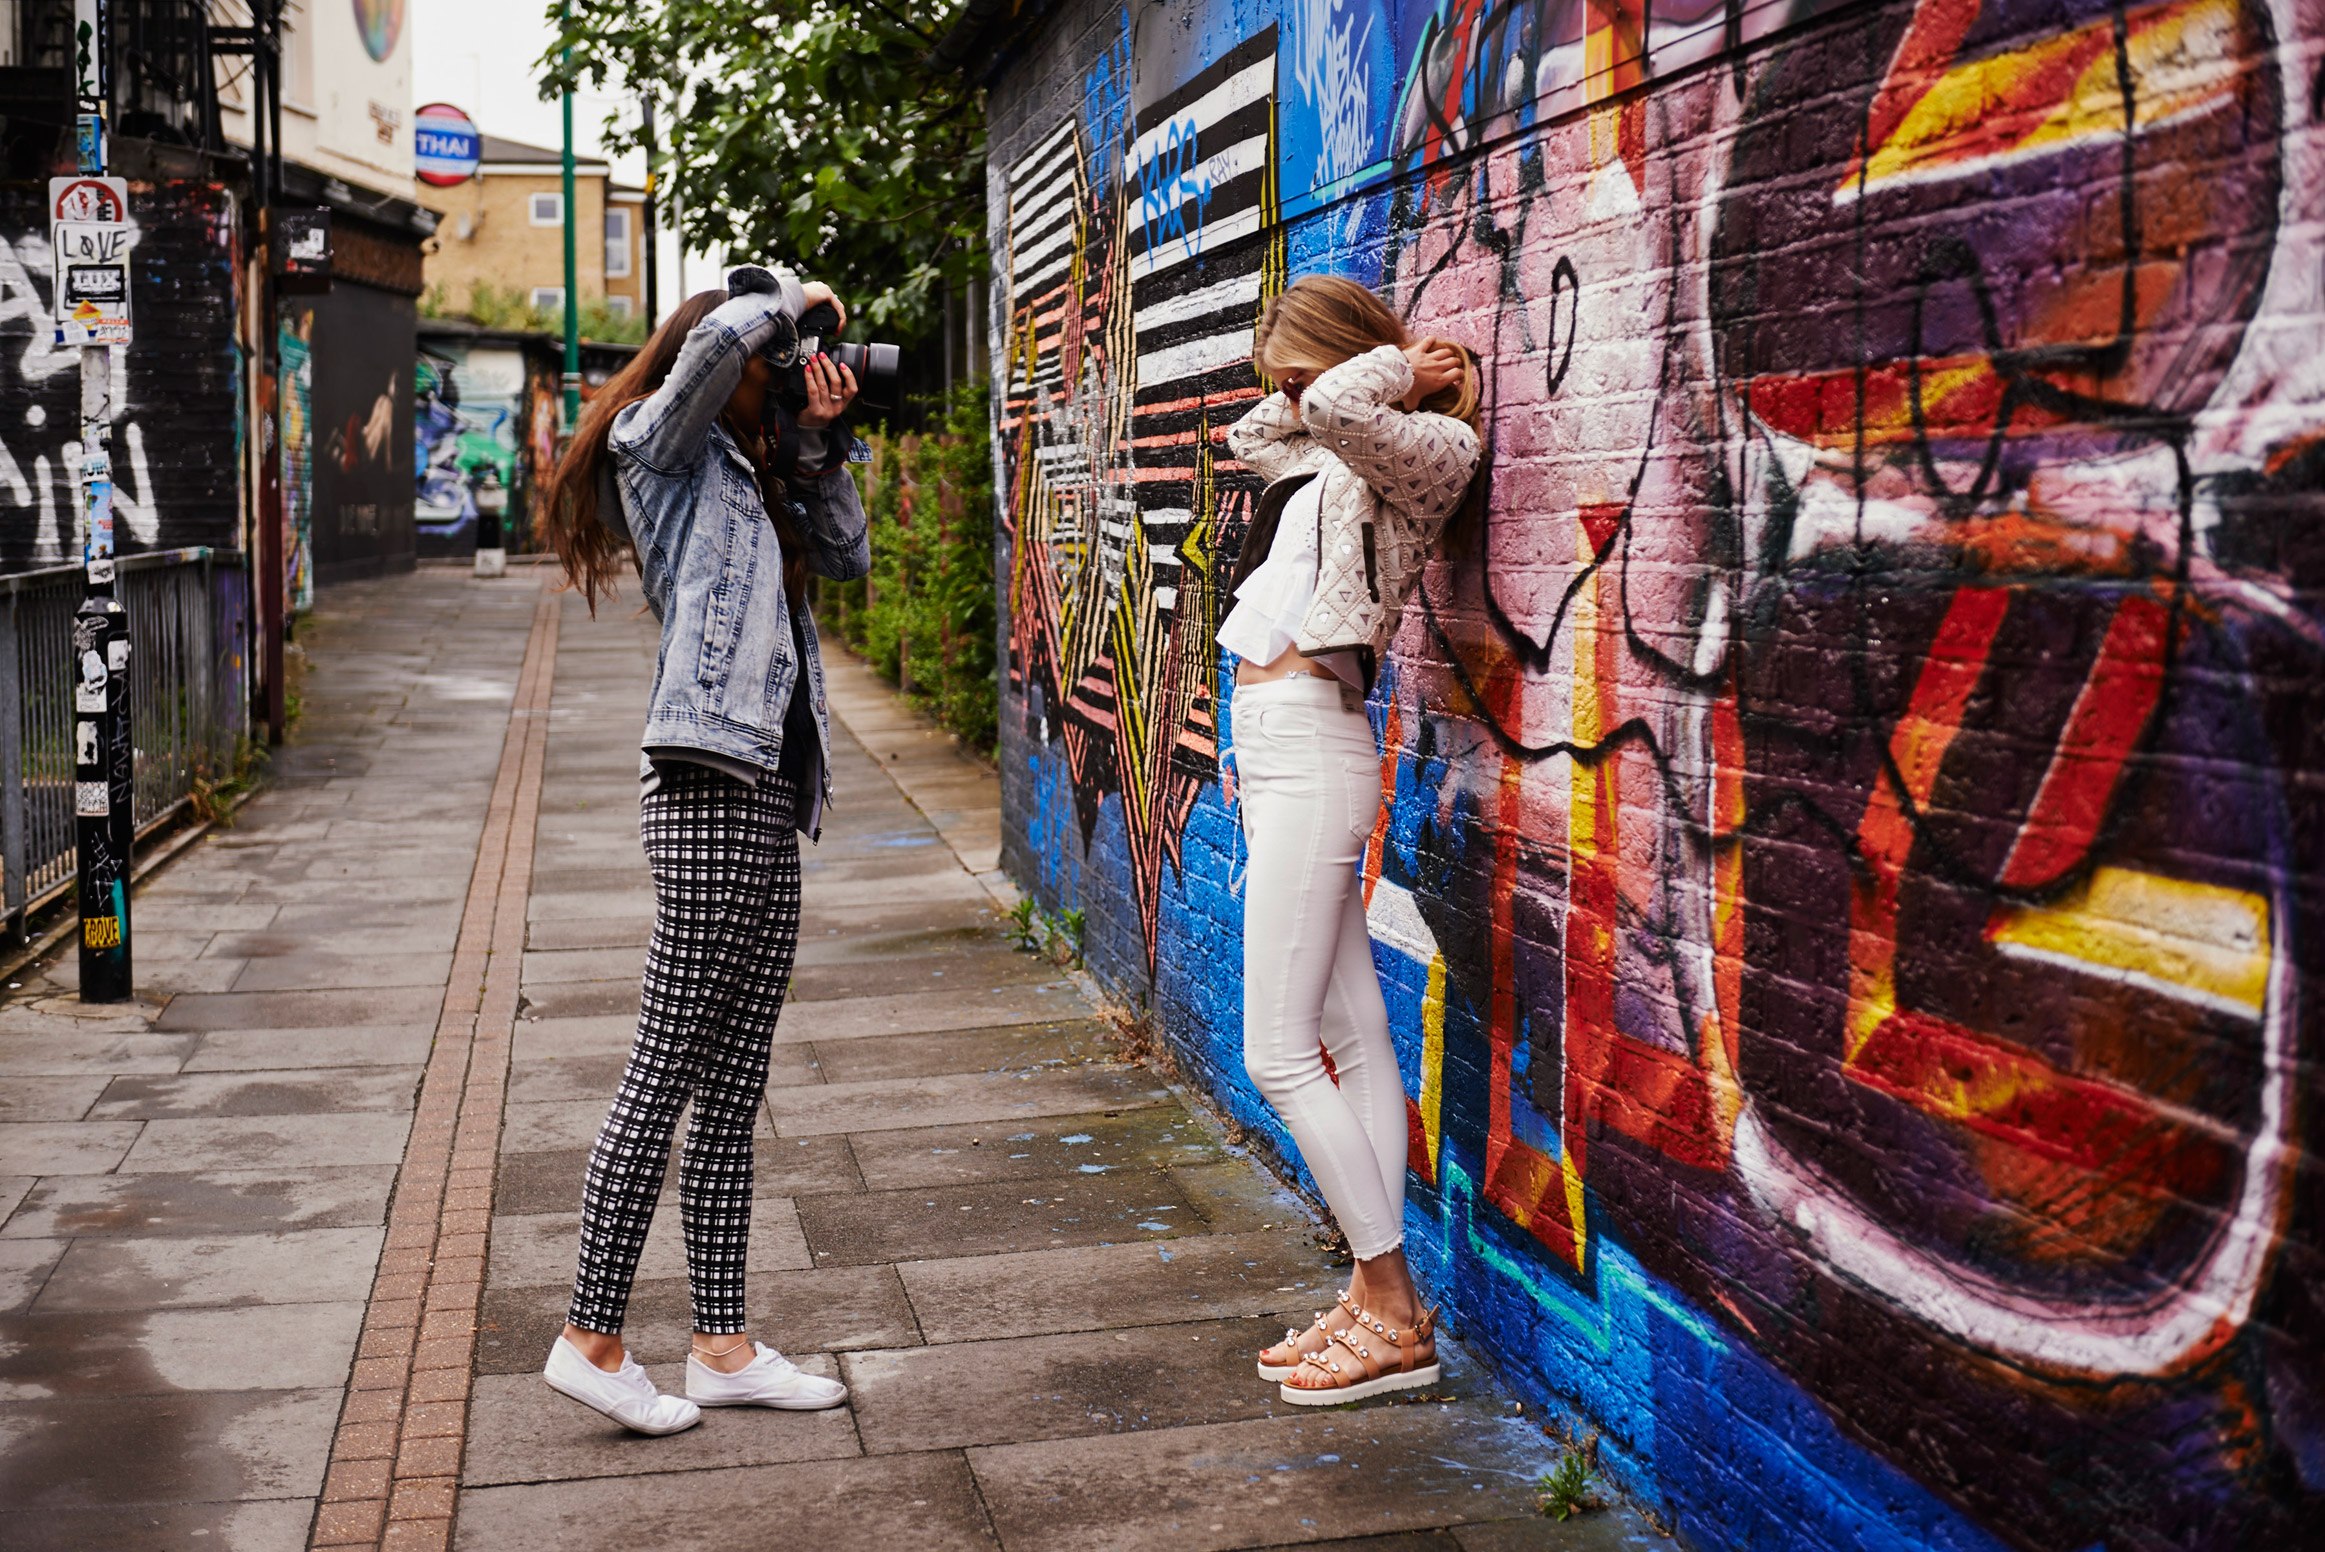 bts-william-morris-london-london-eye-big-ben-shoot-photoshoot-streets-6hags